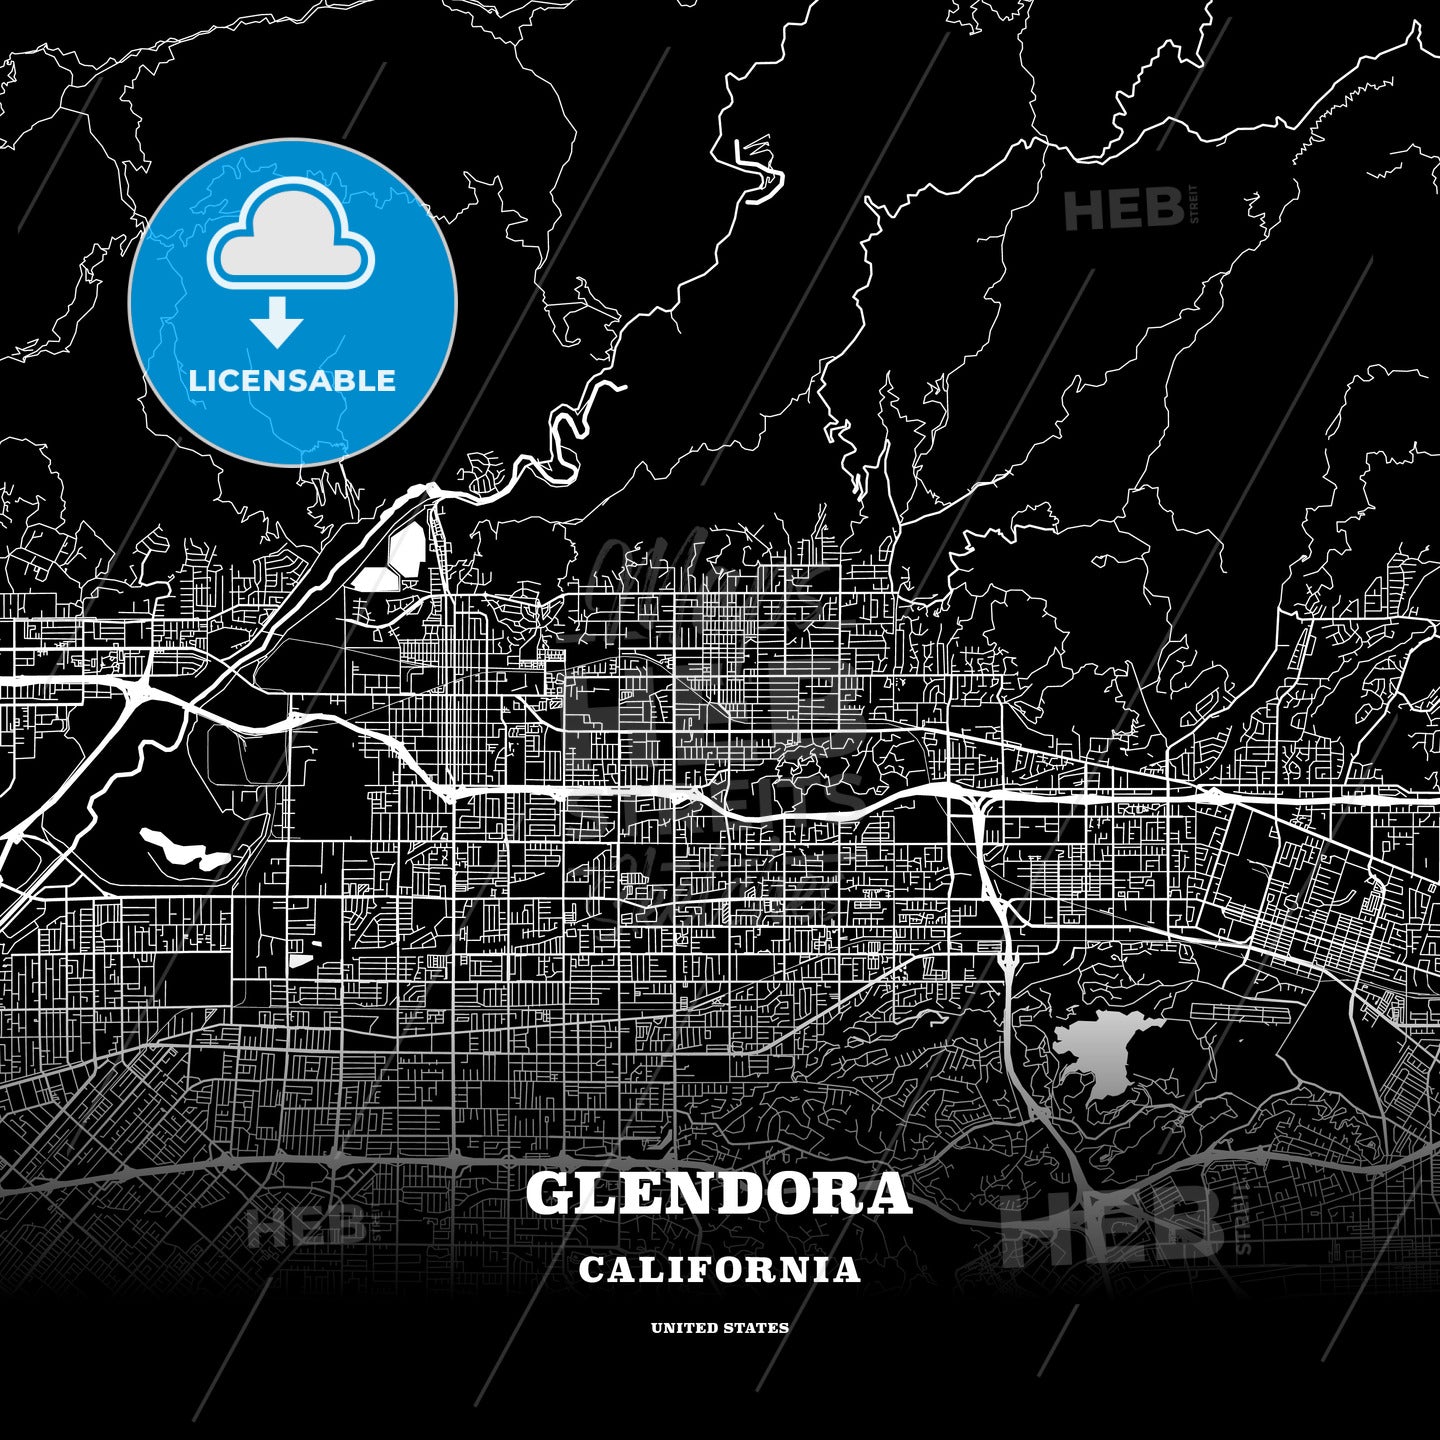 Glendora, California, USA map